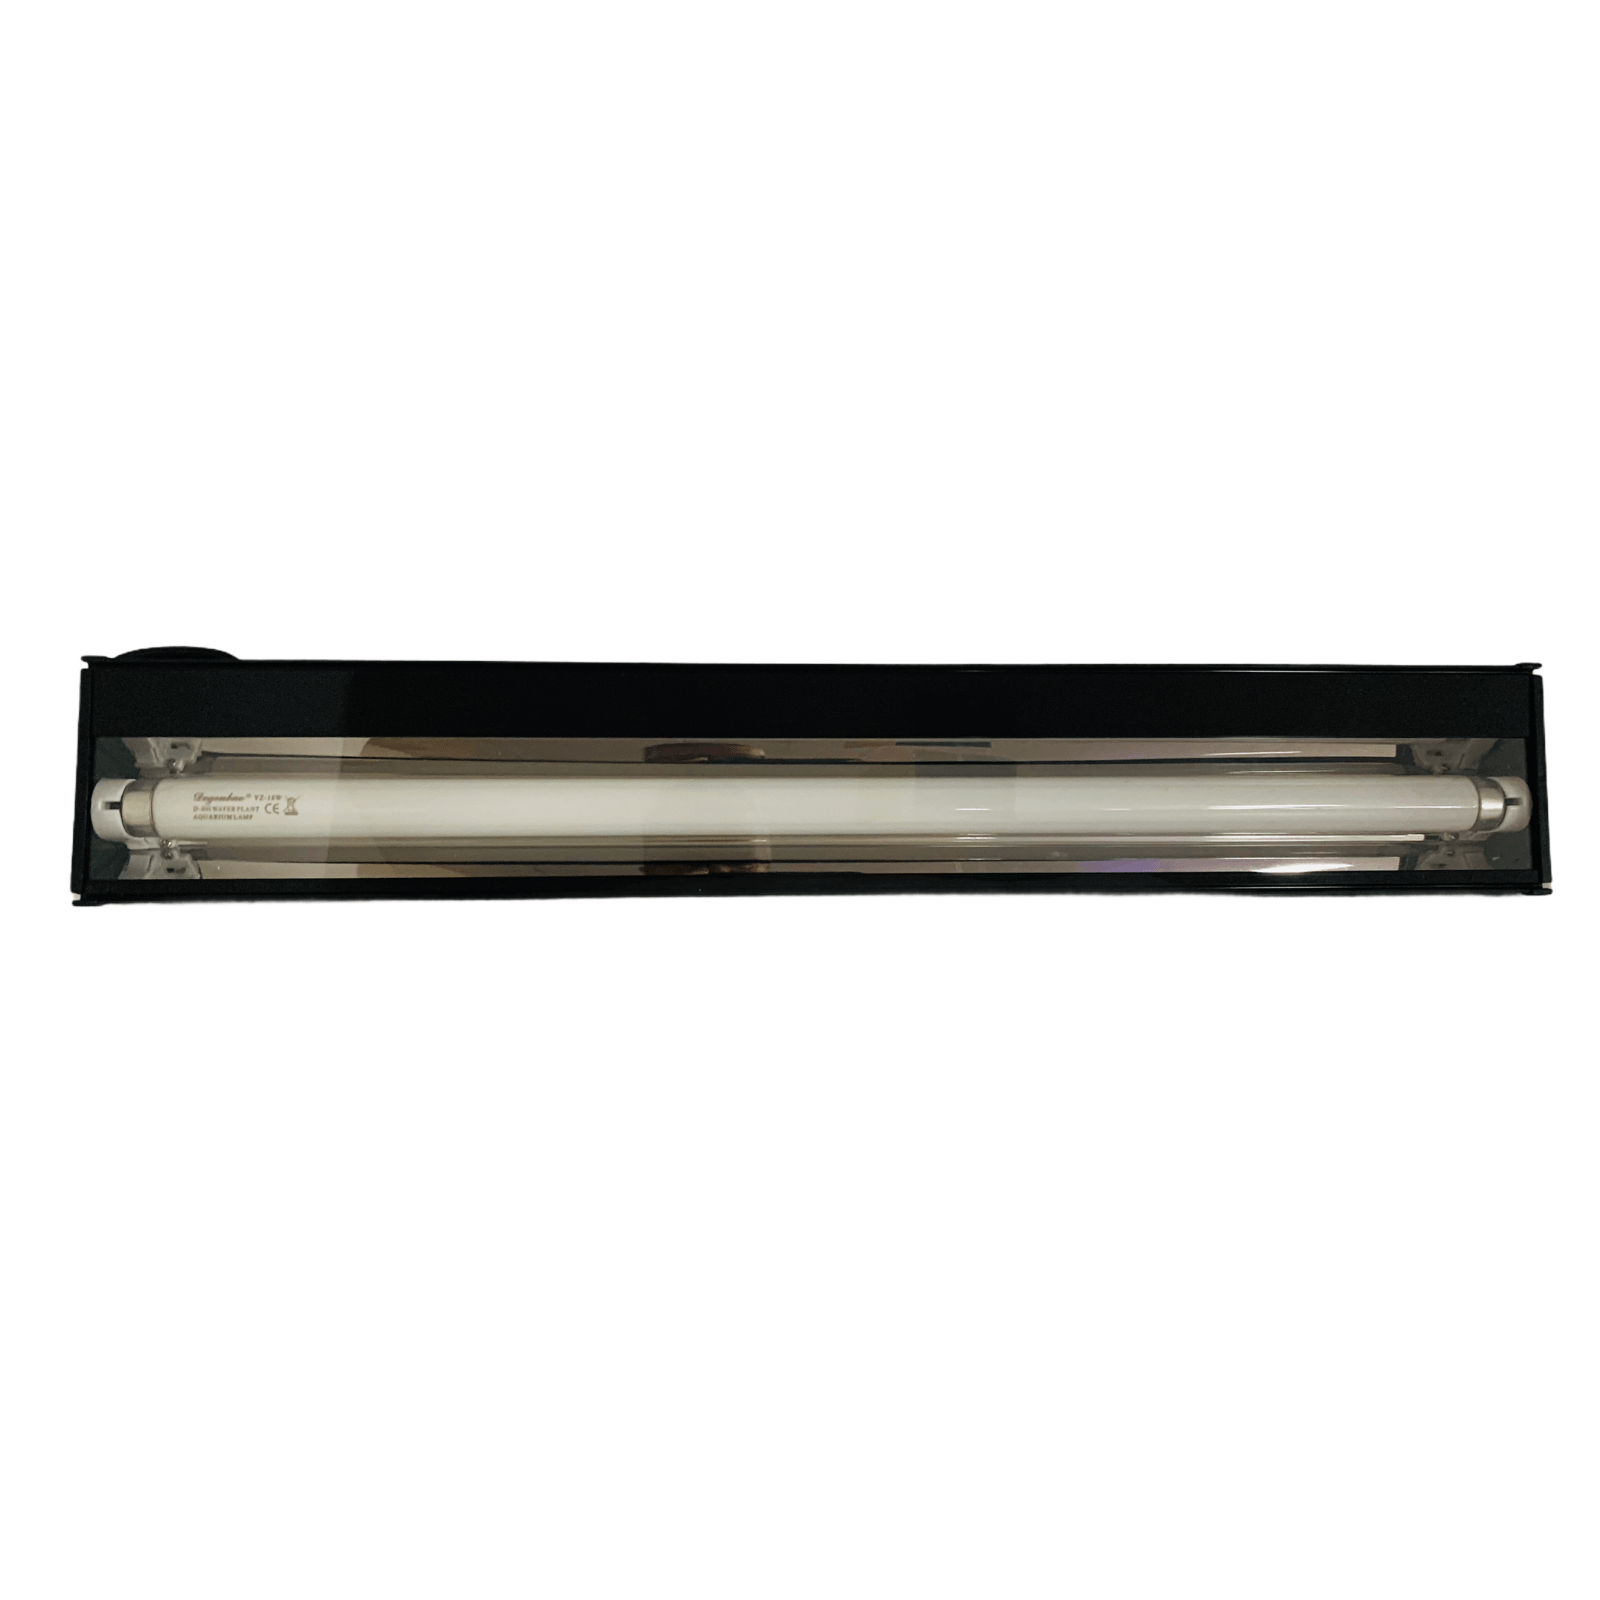 Petworx Fluorescent T8 Light Reflector 60cm